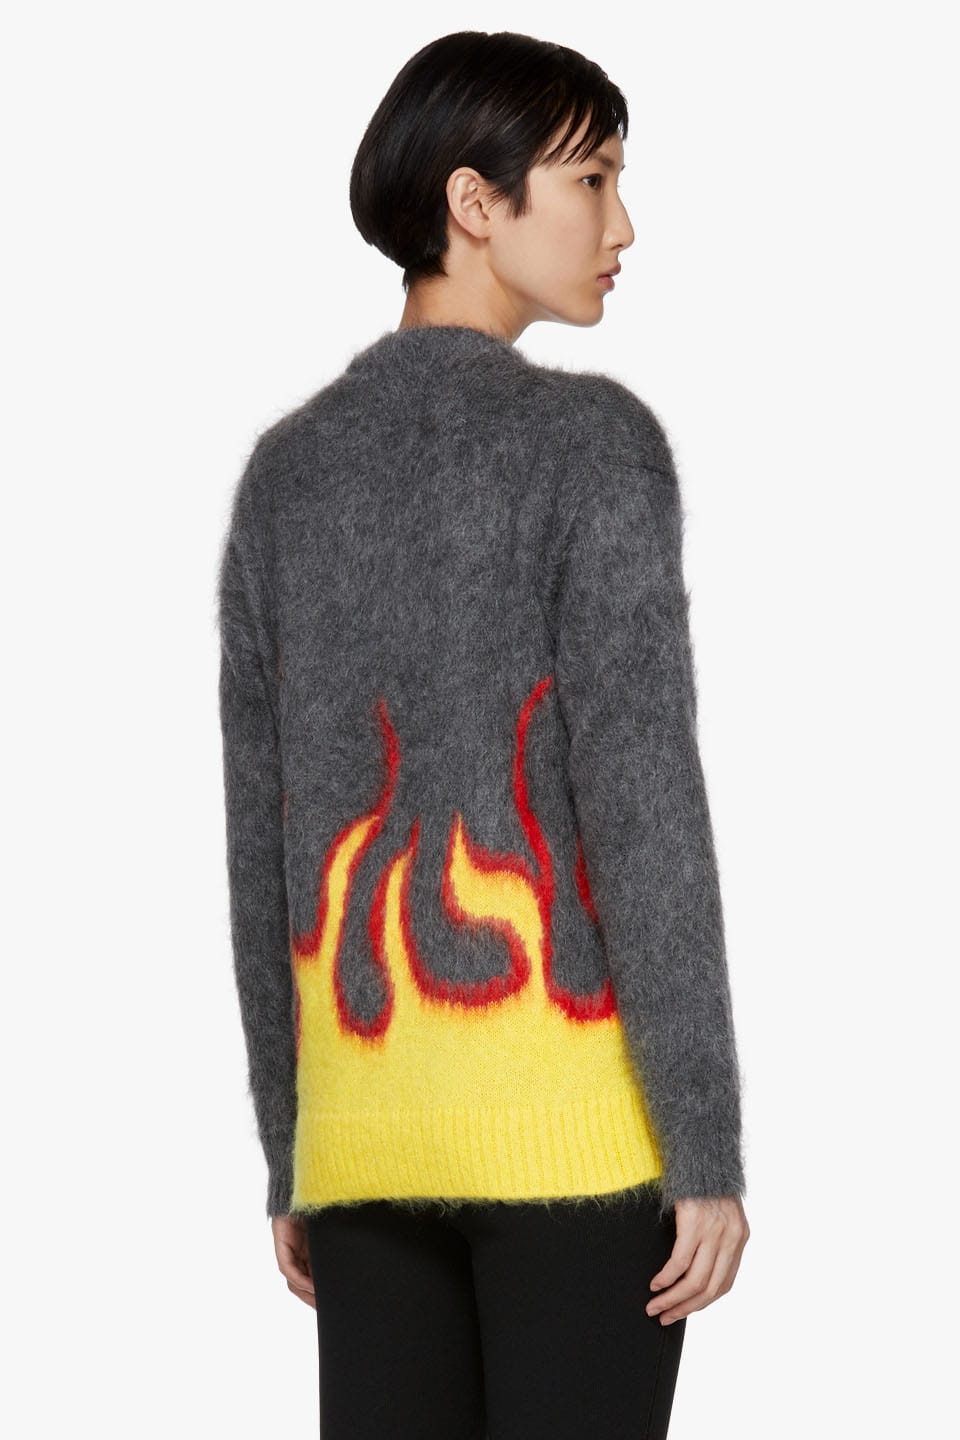 prada fire sweater